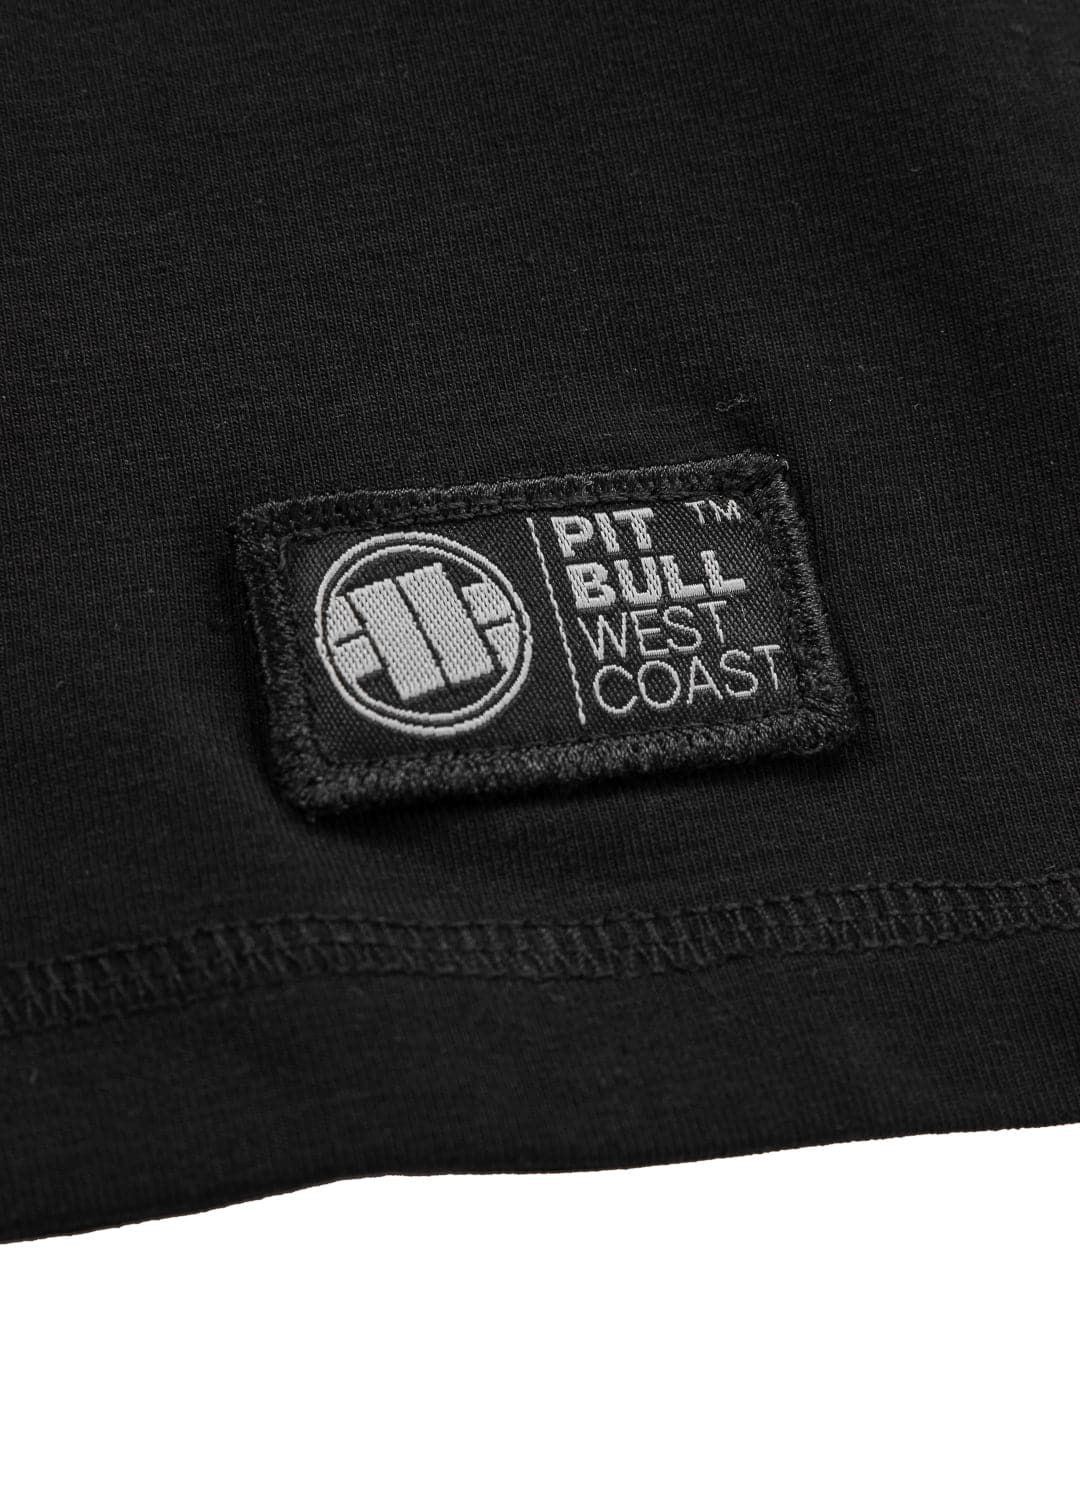 HILLTOP Kids Black Hooded Long Sleeve - Pitbull West Coast International Store 